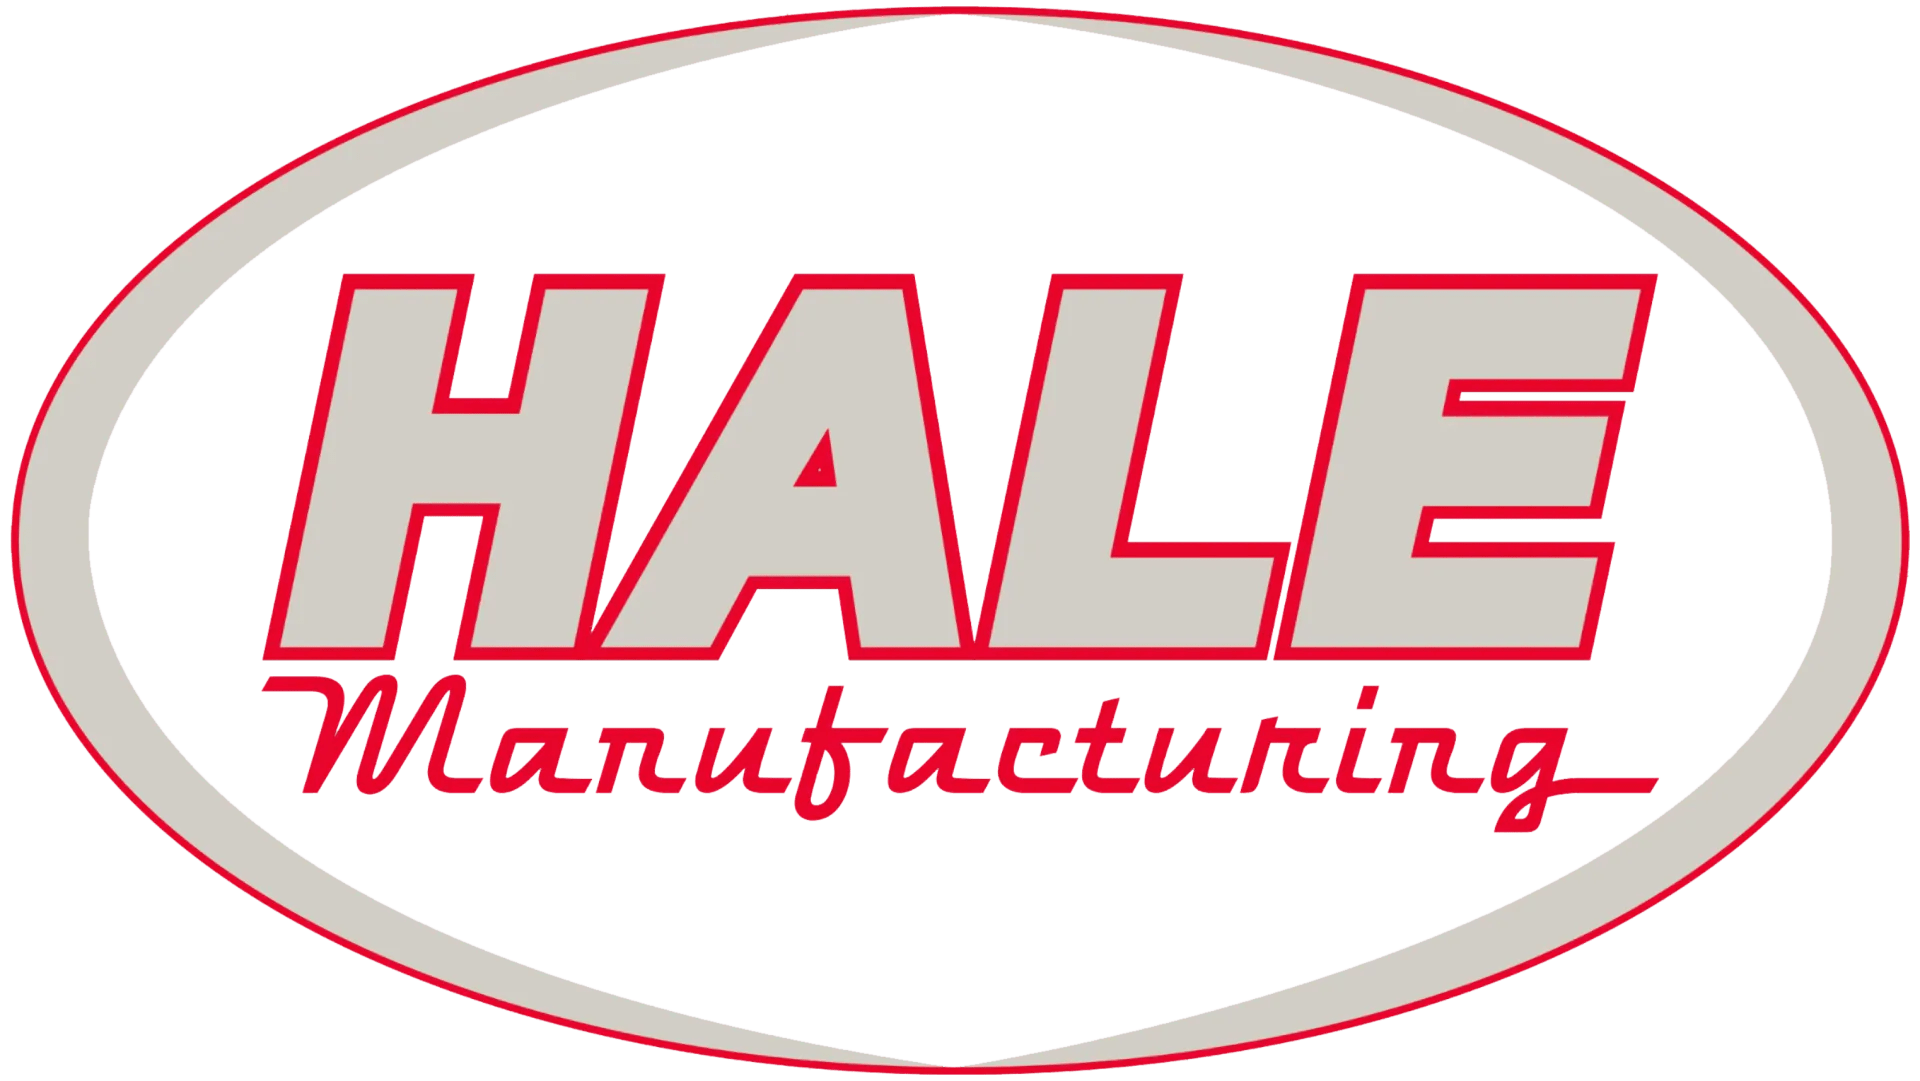 Hale Manufacturing